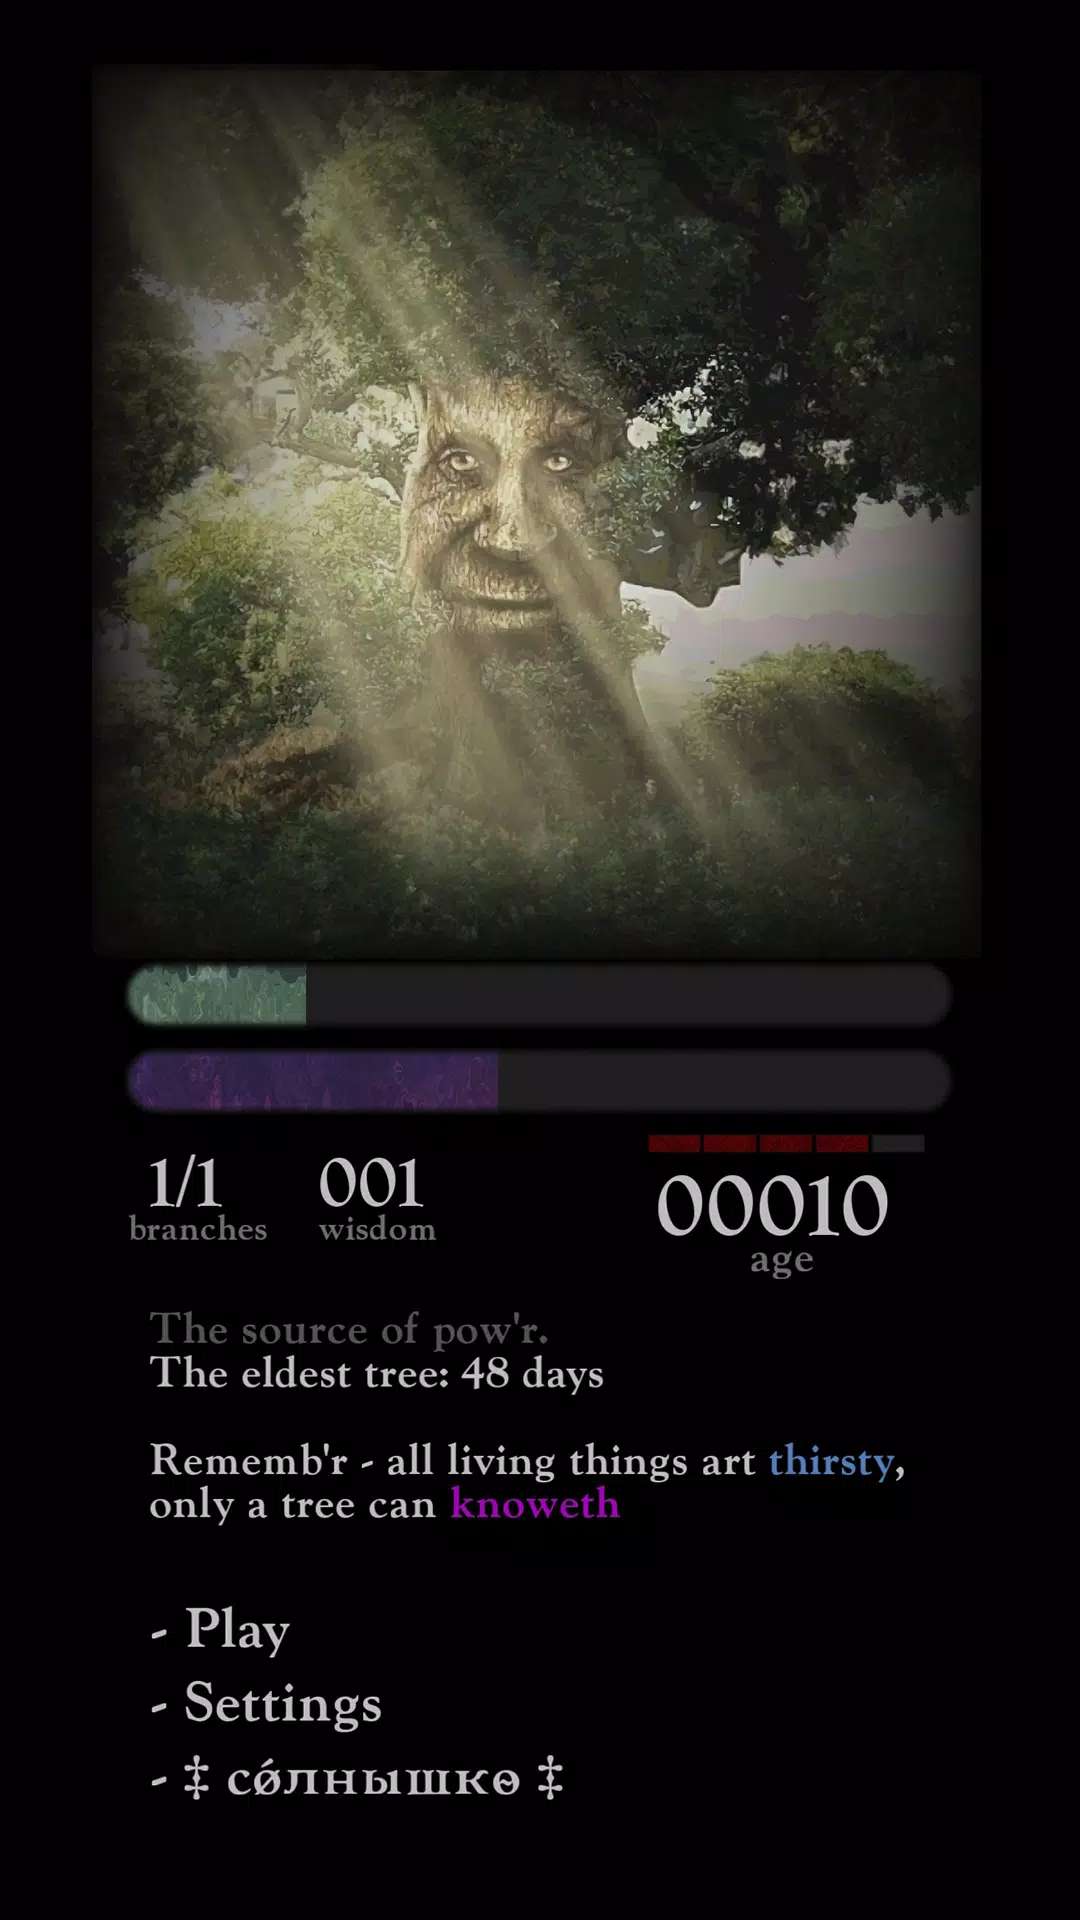 Wise-Mystical-Tree (u/Wise-Mystical-Tree) - Reddit